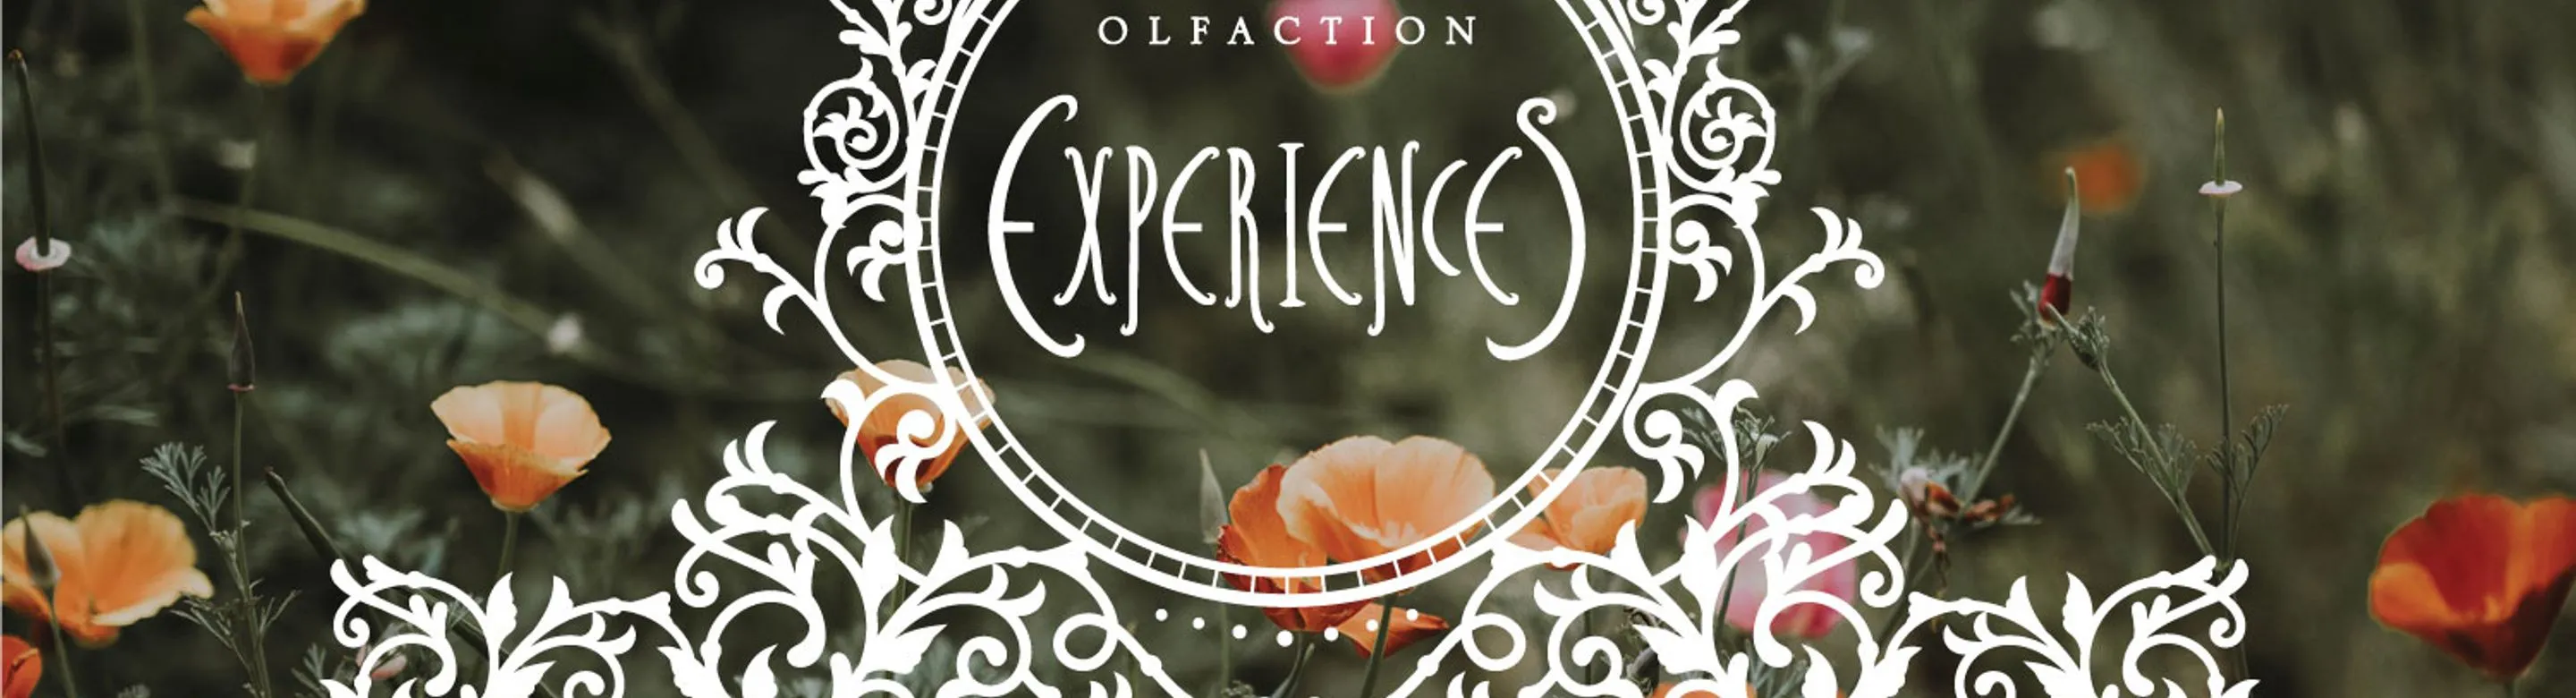 Olfaction Experiences